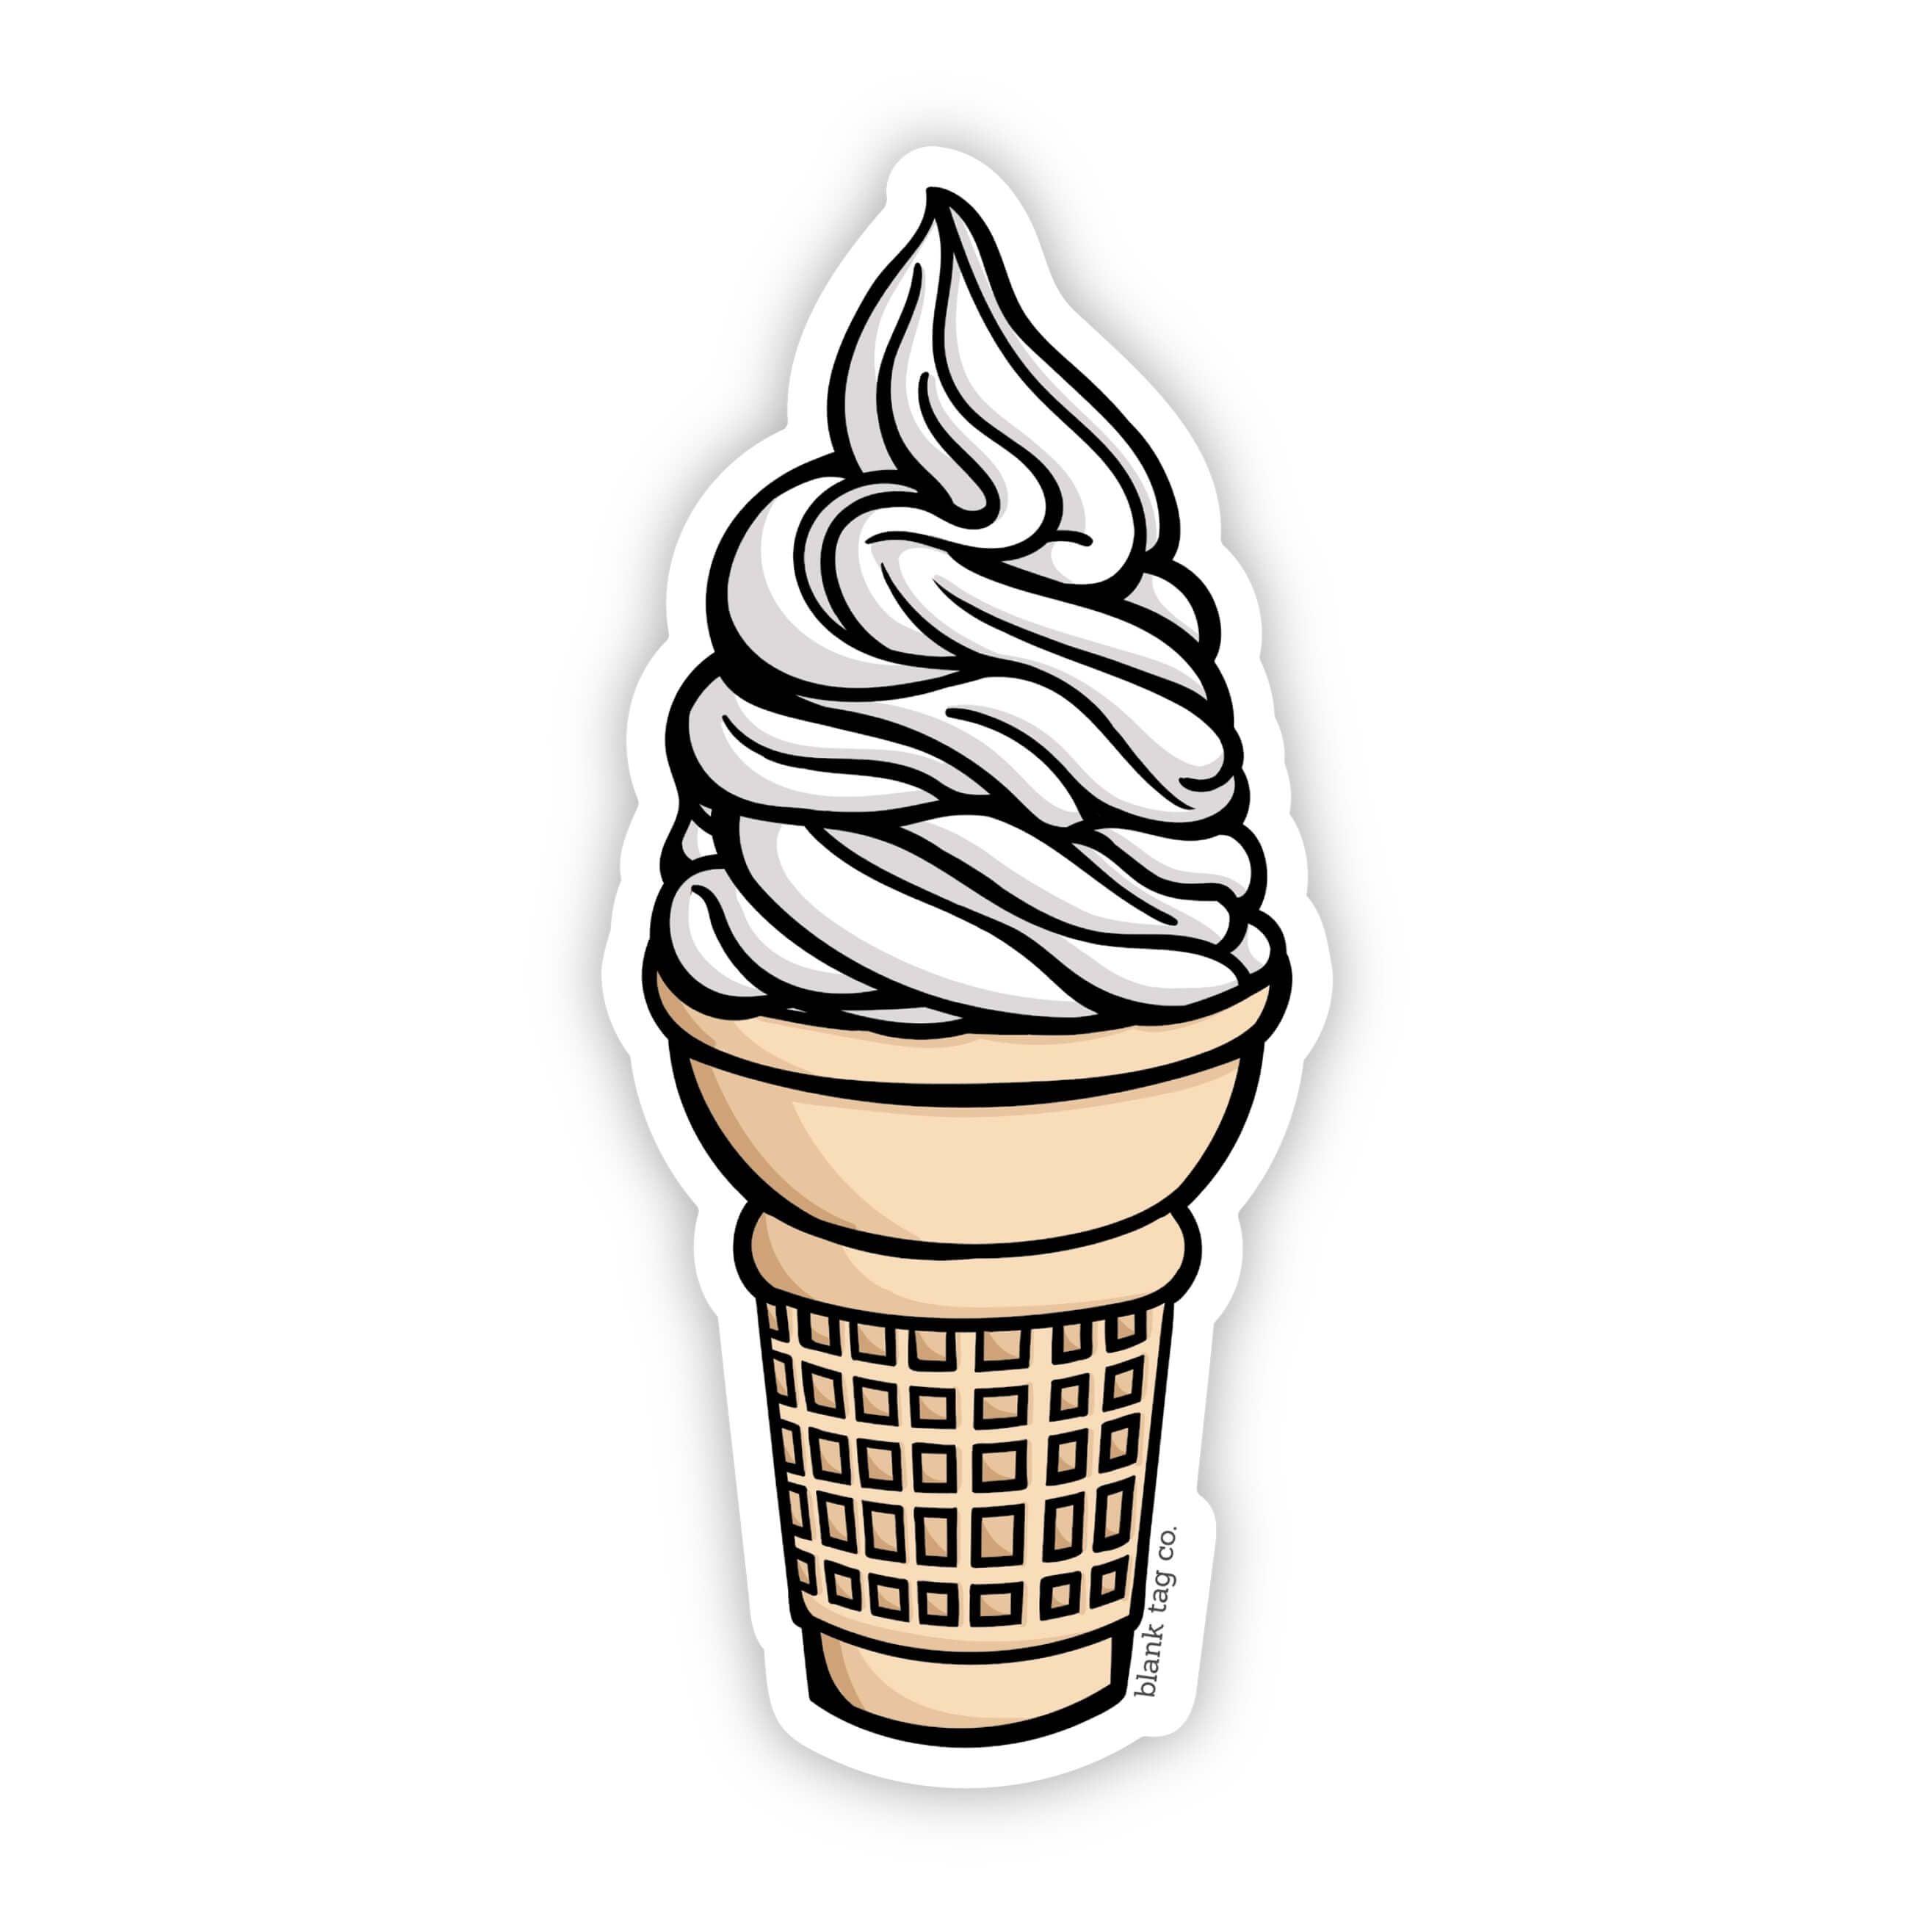 The Vanilla Soft Serve Ice Cream